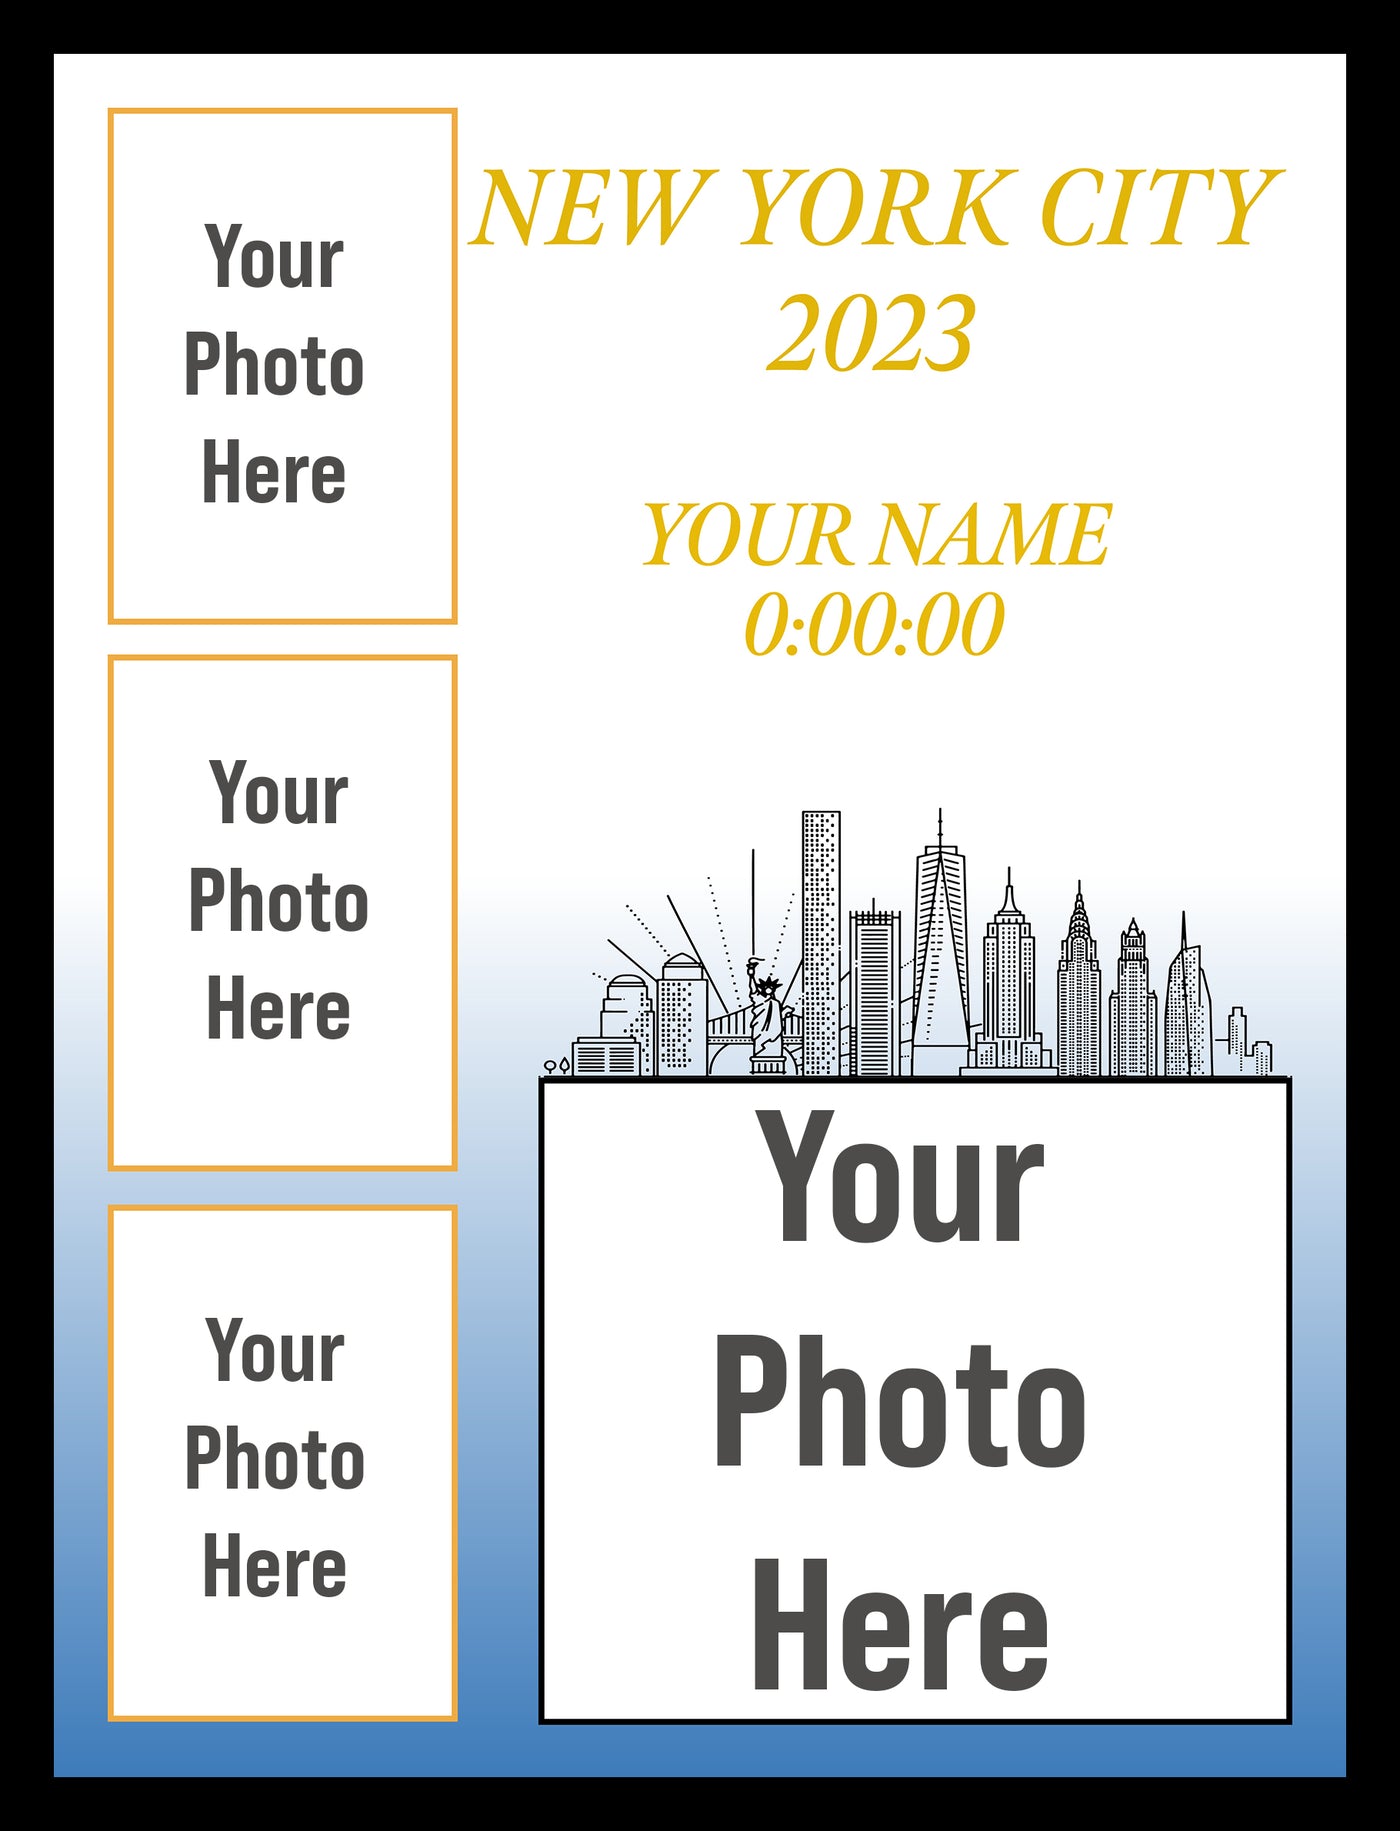 New York City 2023